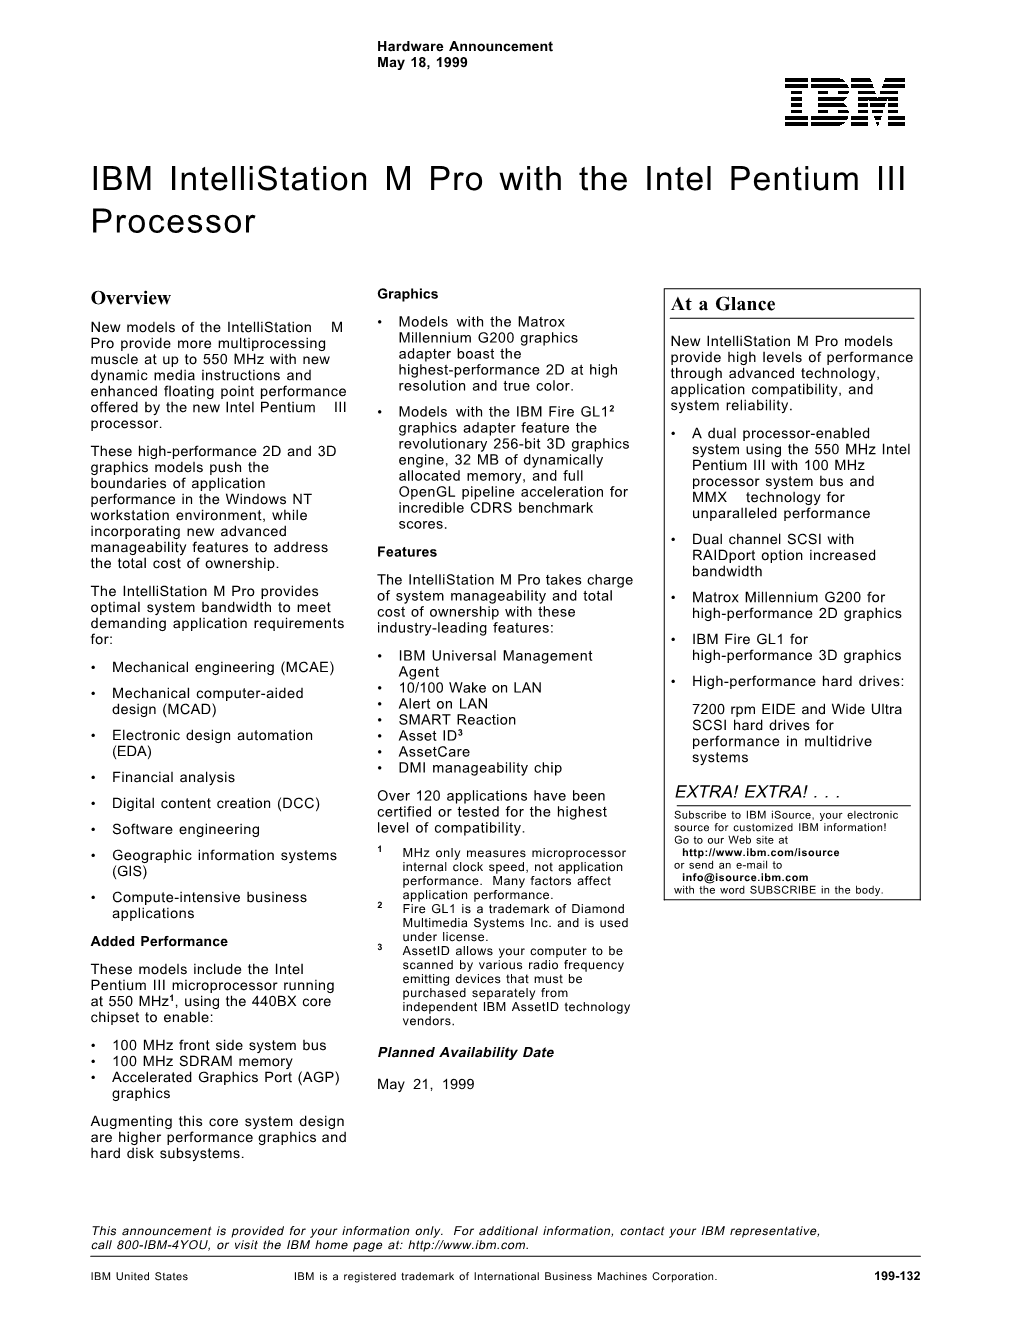 IBM Intellistation M Pro with the Intel Pentium III Processor